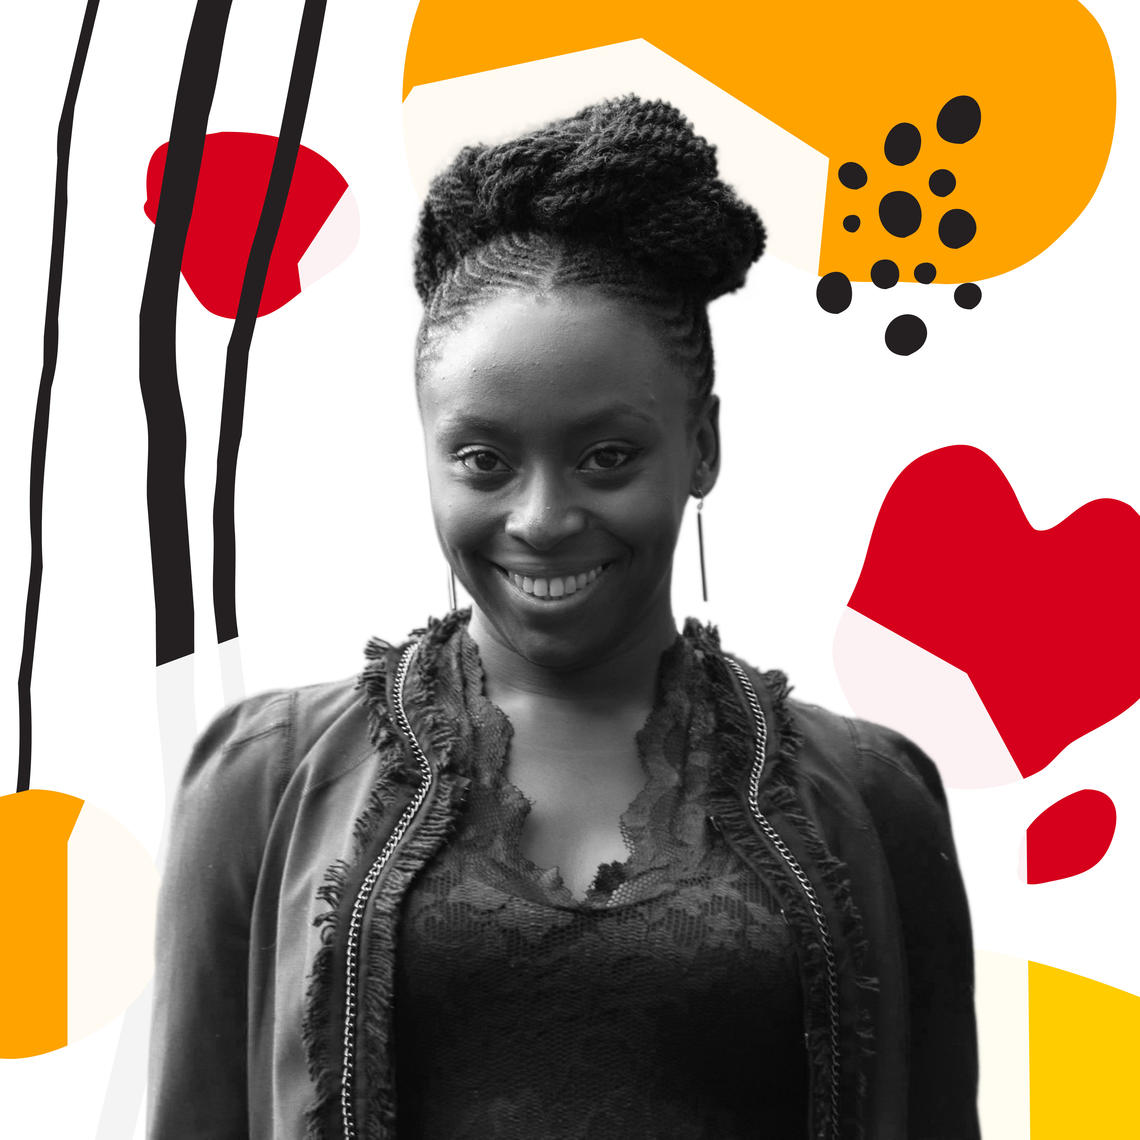 A portrait of Chimamanda Ngozi Adichie